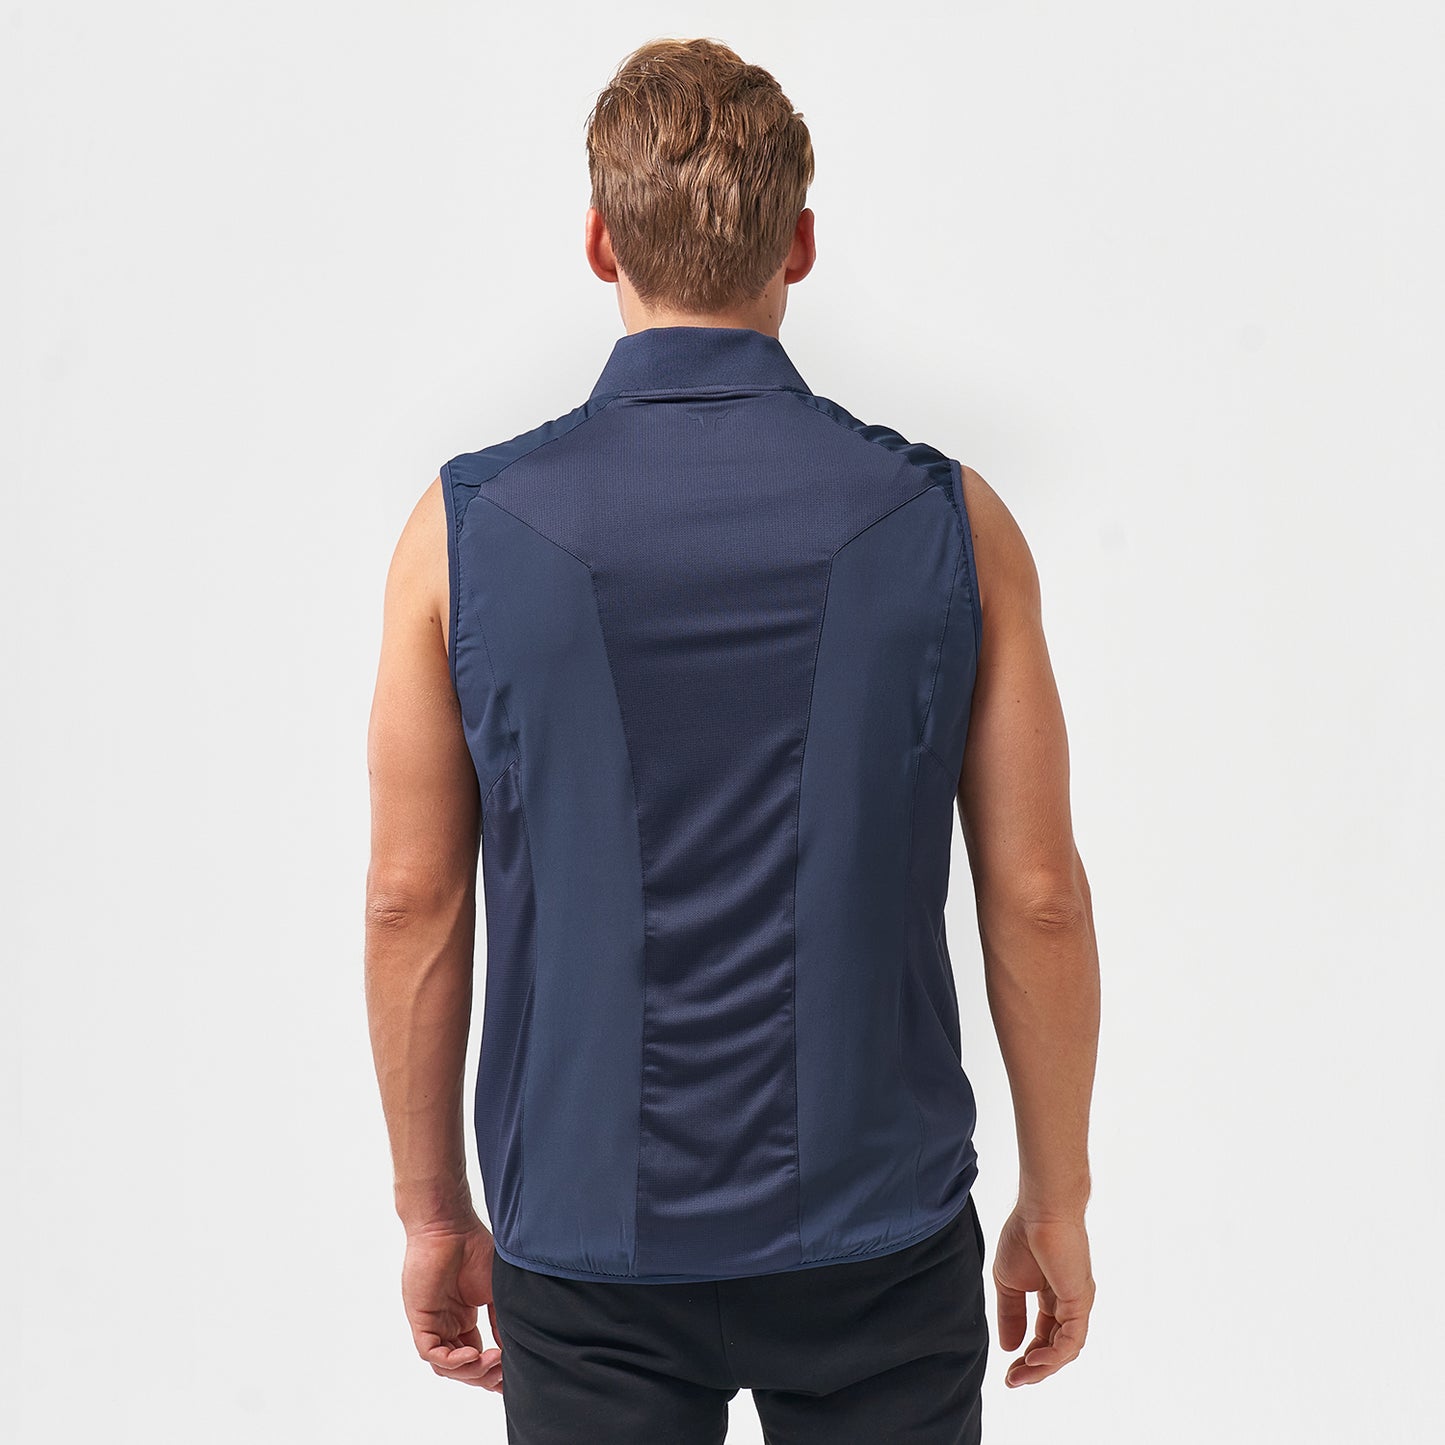 squatwolf-gym-wear-sleeves-less-lab-360-running-gilet–blue-running-tops-for-men